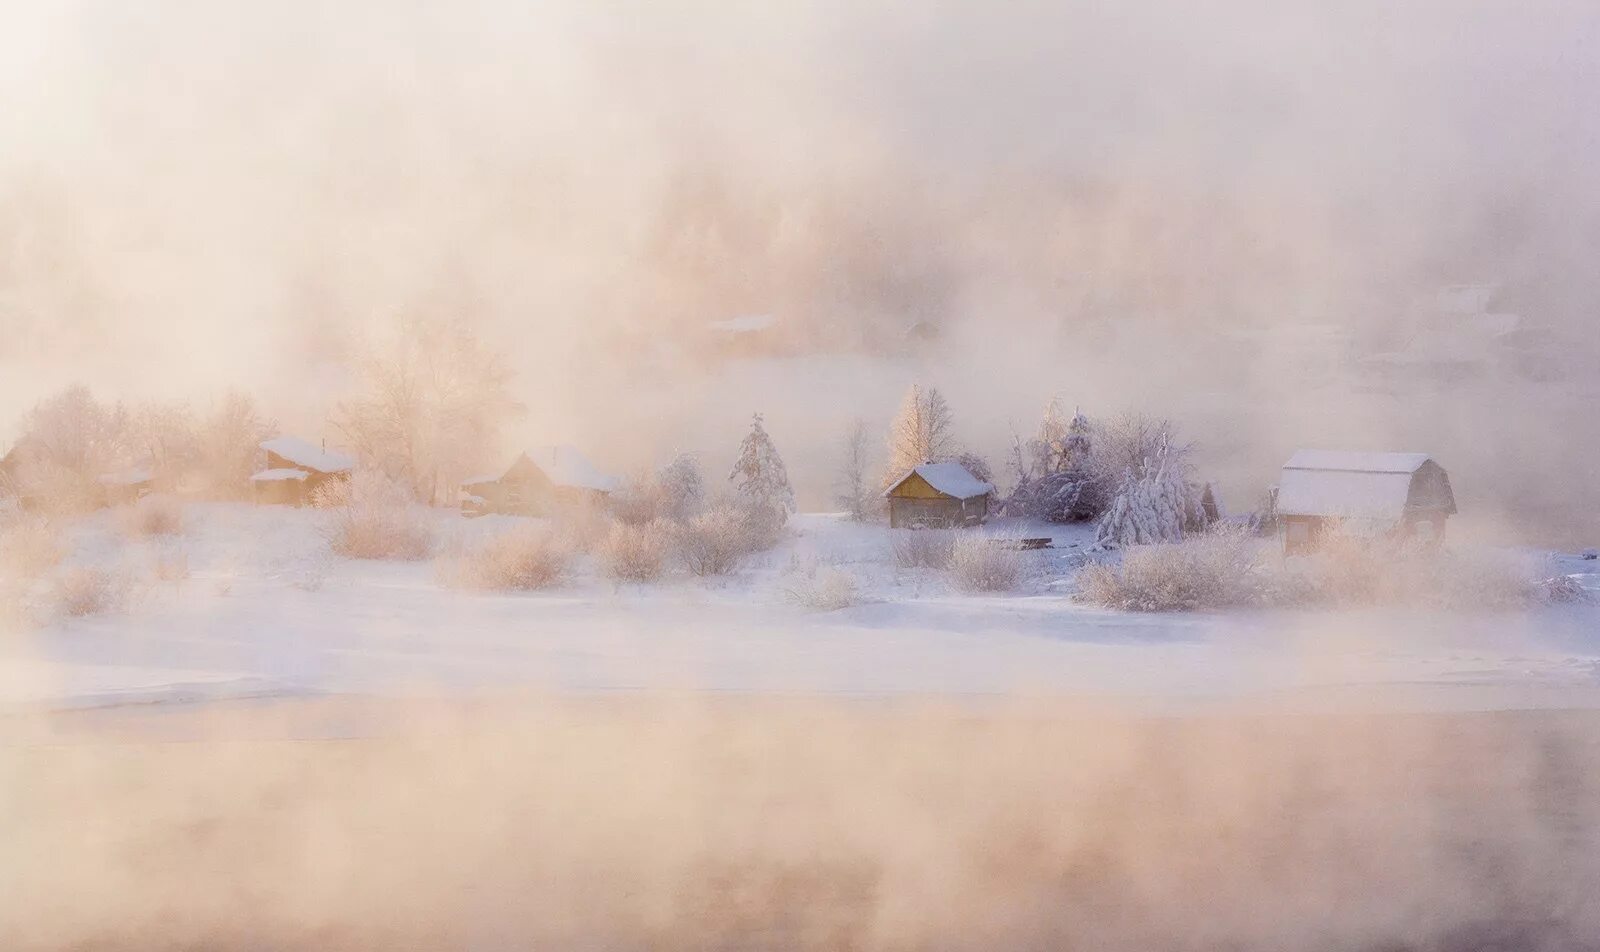 Сильный утренний мороз. Зимний пейзаж с туманом. Пейзаж в дымке. Морозное утро в деревне. Пейзаж туман.